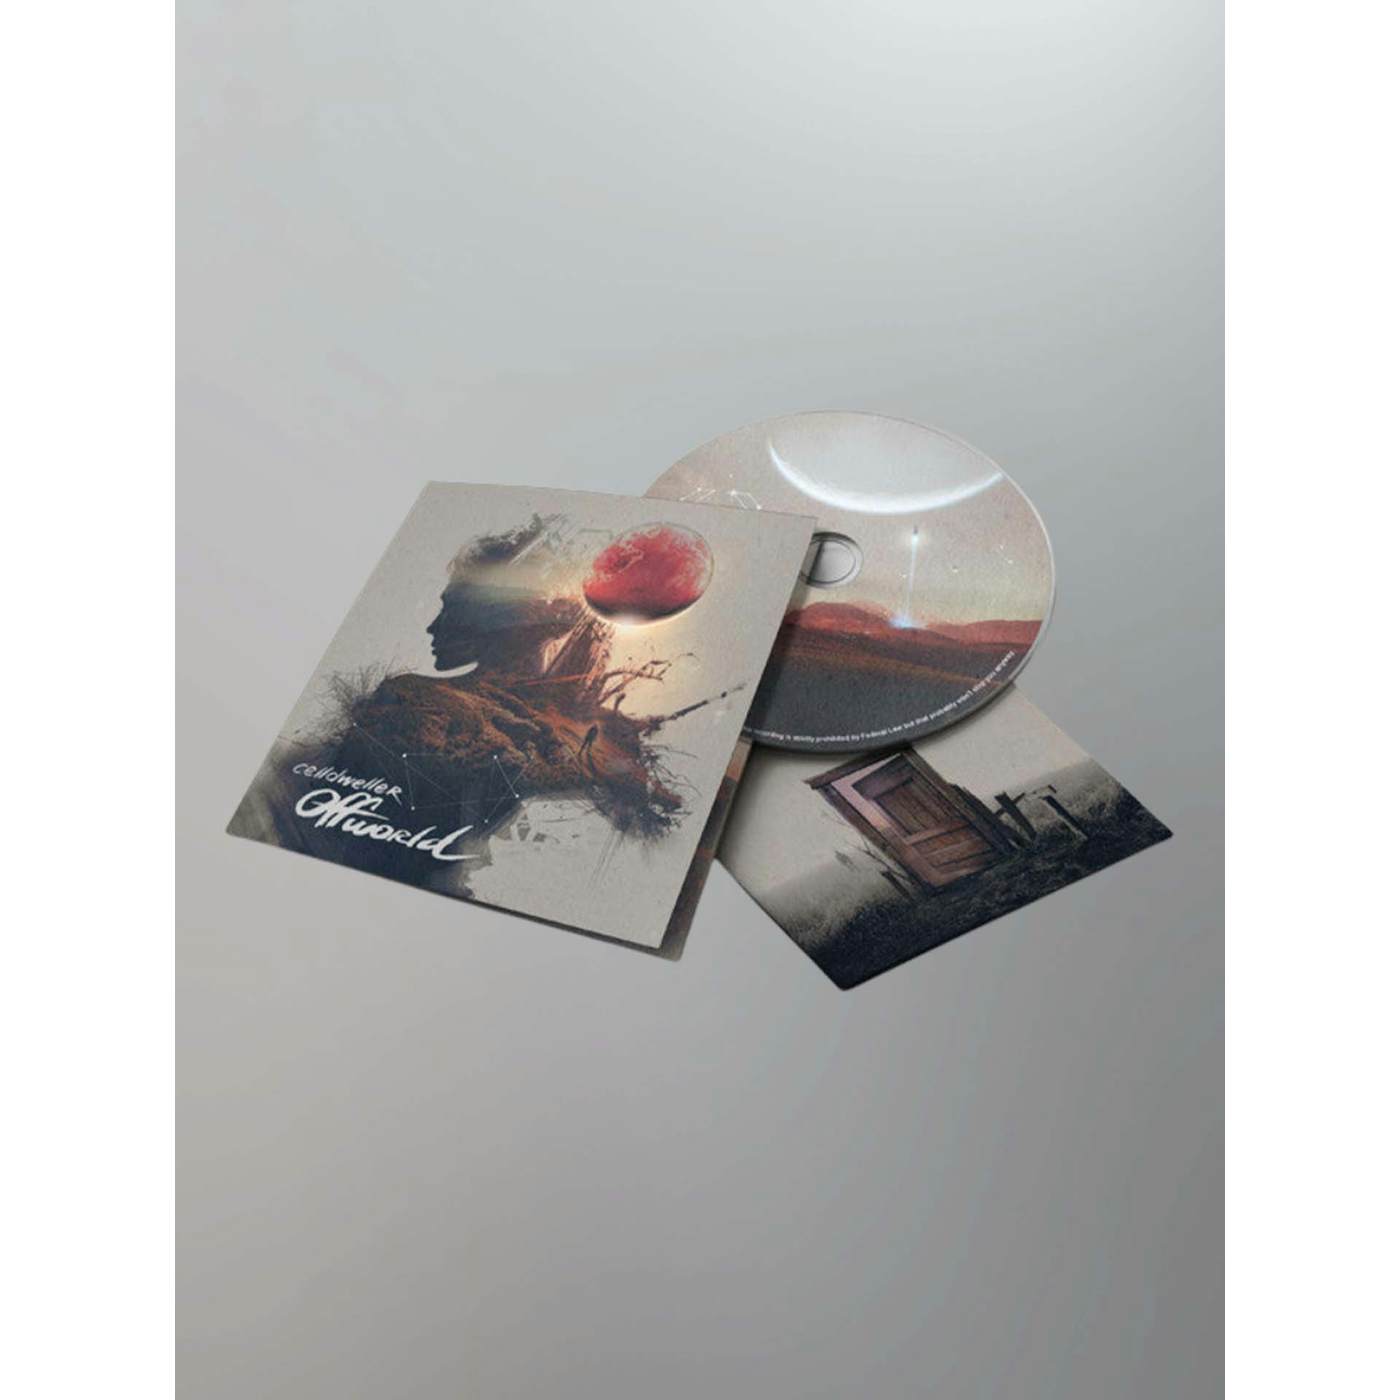 Celldweller - Offworld Digipack CD